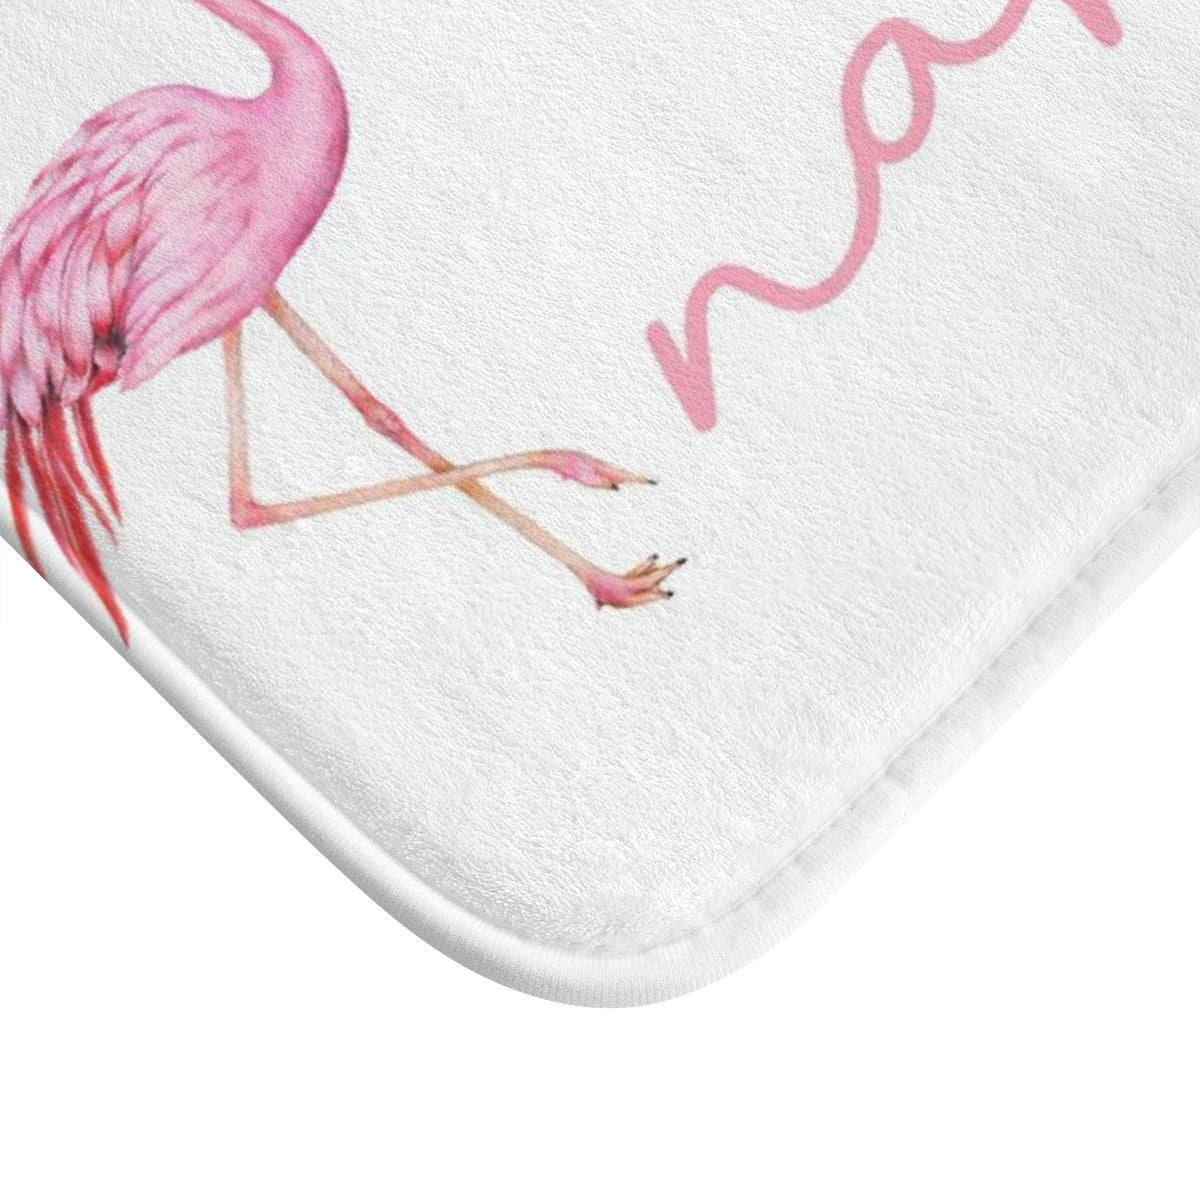 Get Naked Bath Mat, Pink Flamingo Quote White memory foam mat, Funny Microfiber Bathroom Shower Mat Rug Starcove Fashion